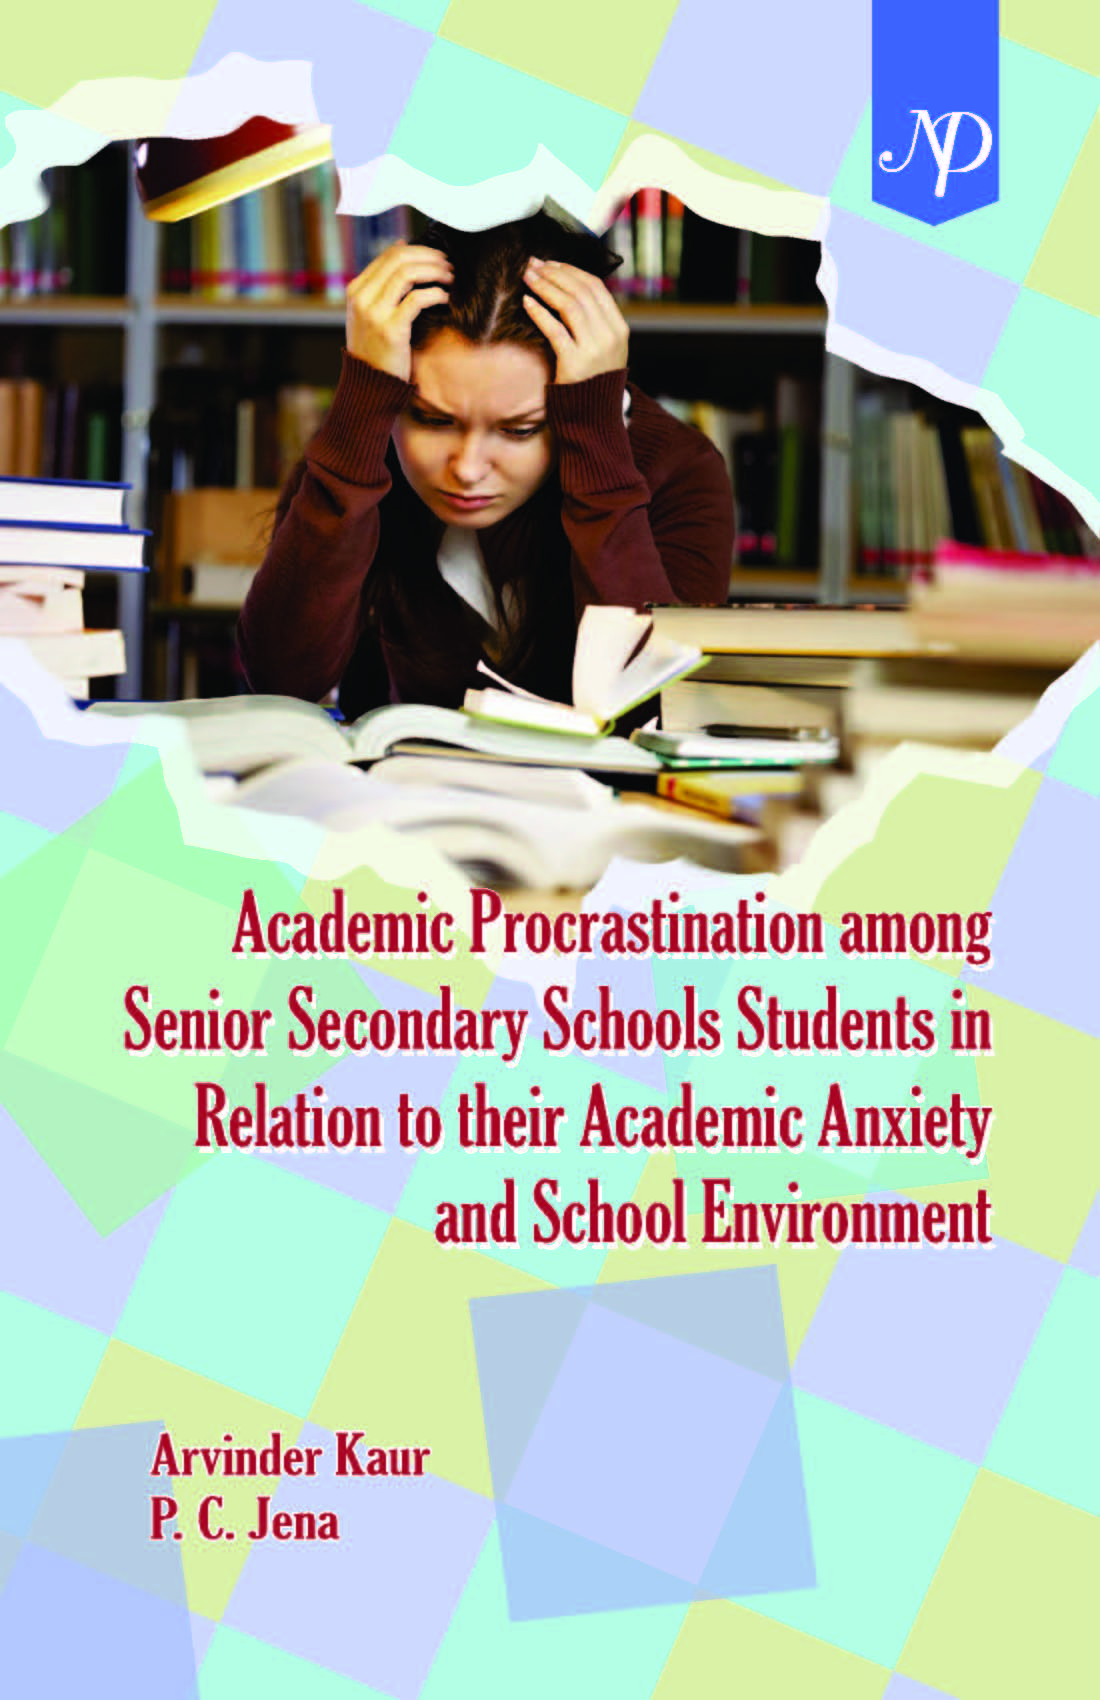 Academic Procrastination among Senior Secondary Schools Cover.jpg